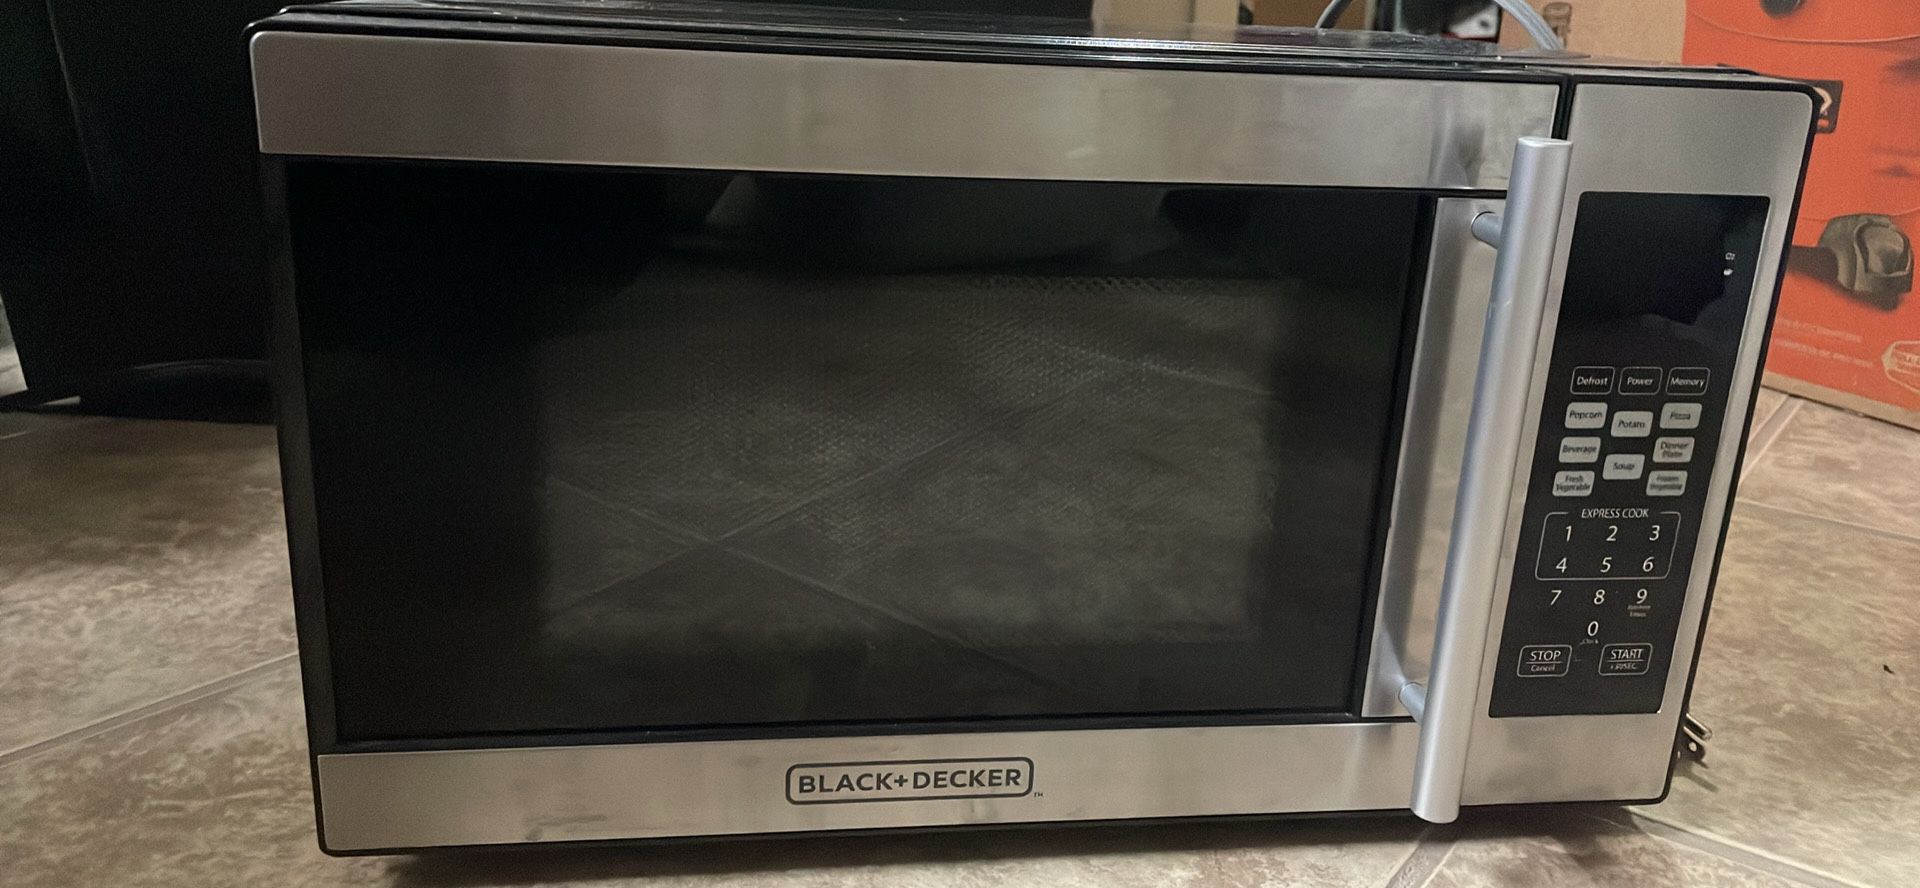 Black + Decker Microwave 